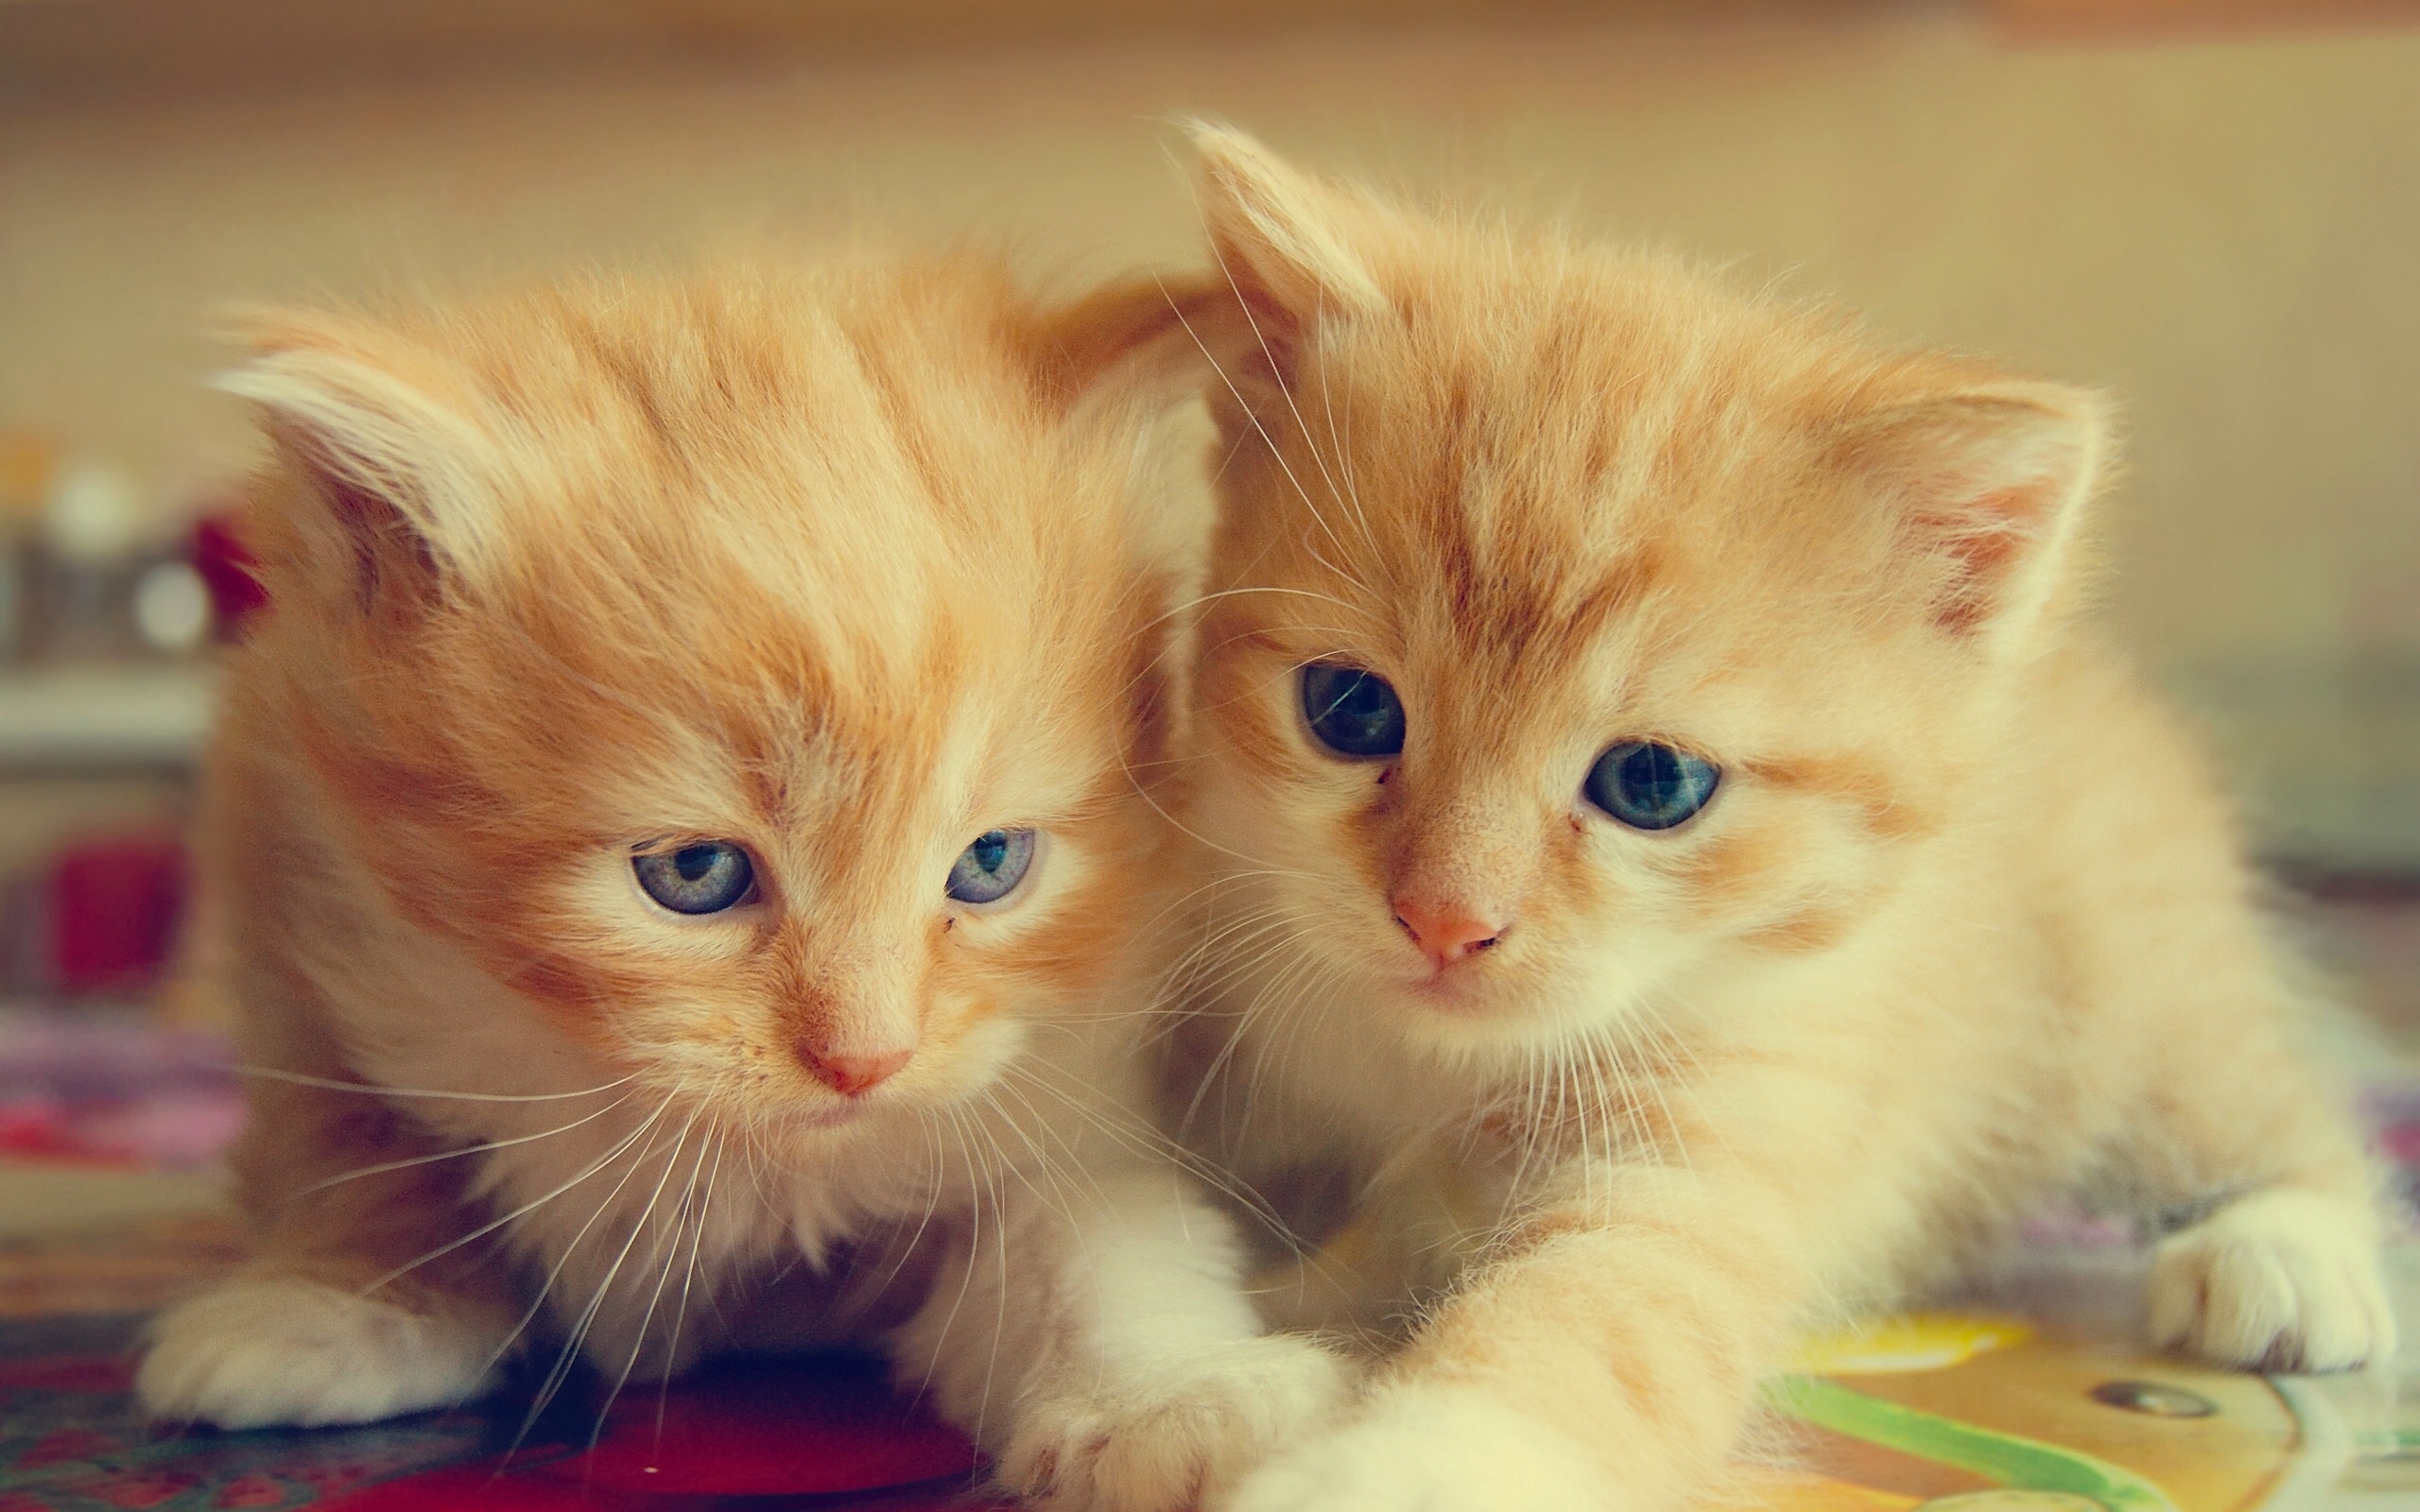 Furry-kittens-two-cats_2560x1600 (1).jpg